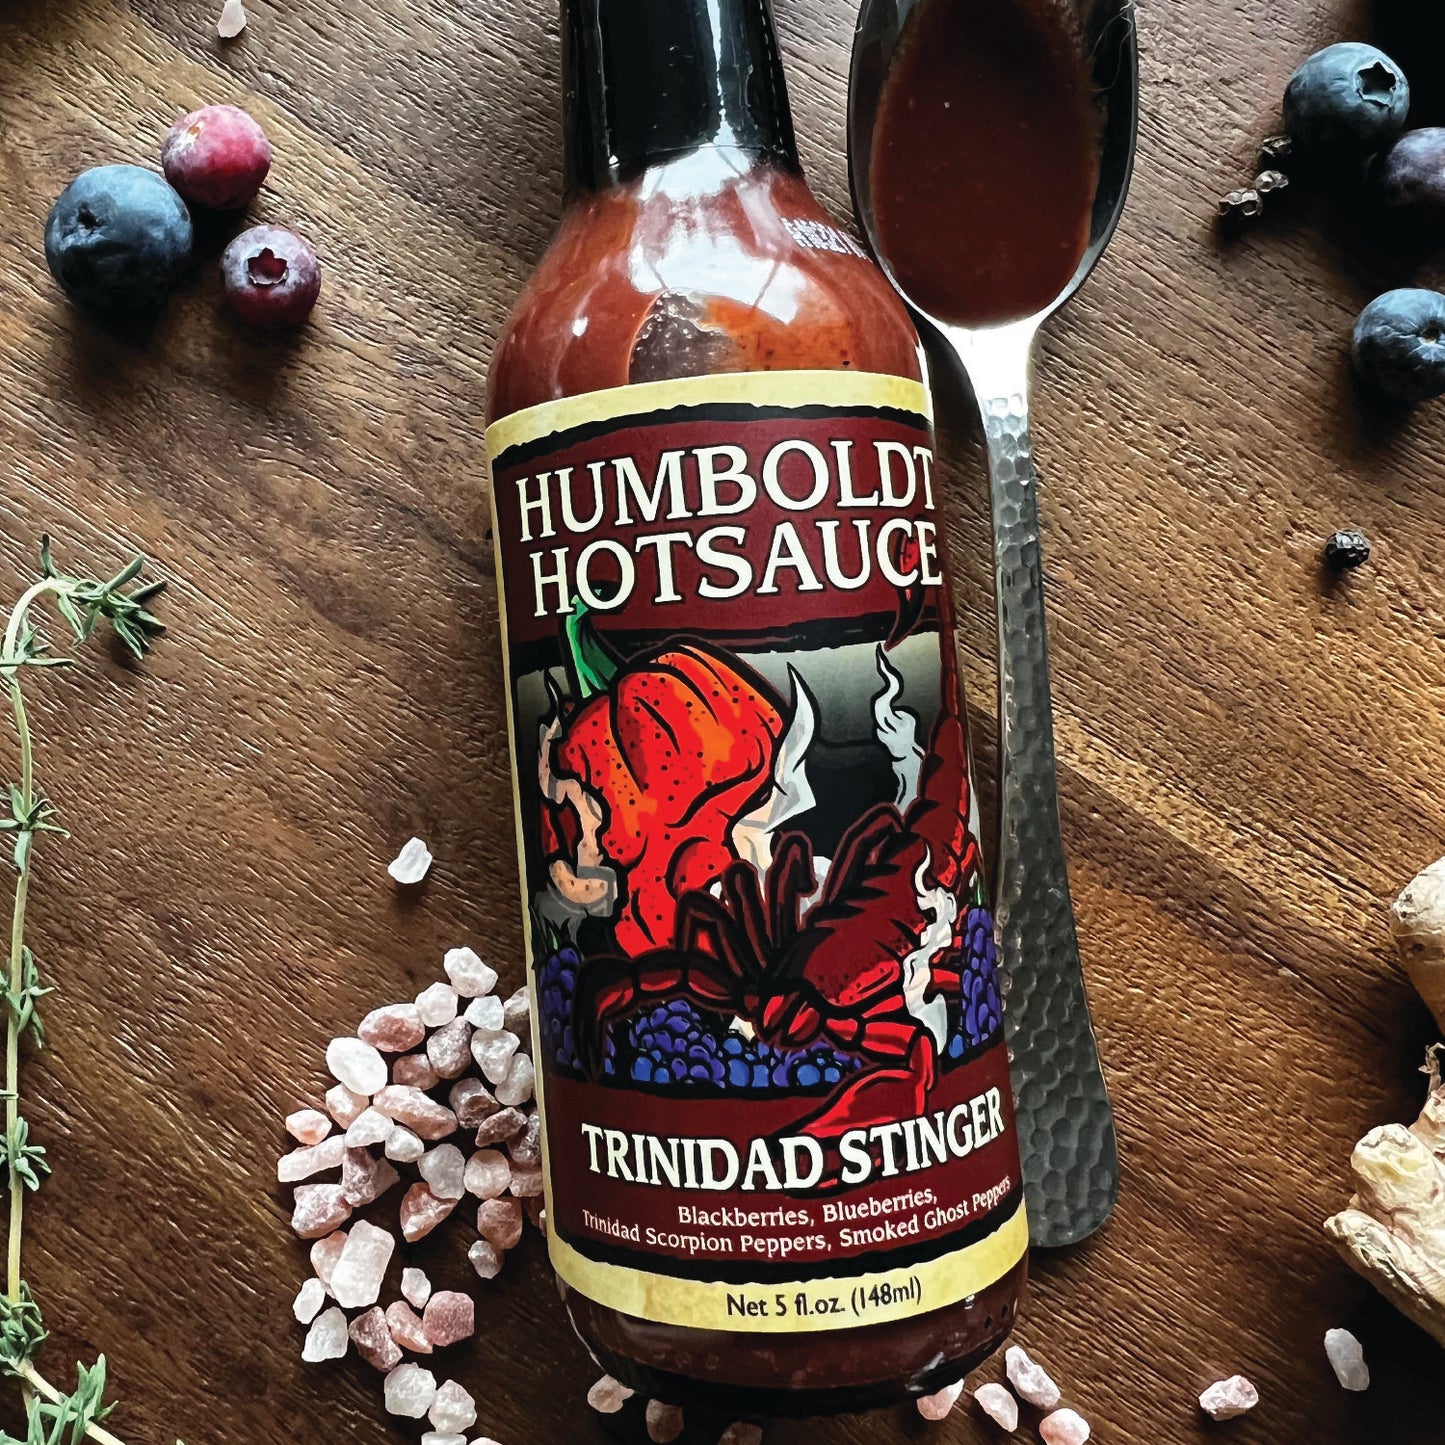 Humboldt Hot Sauce Trinidad Stinger